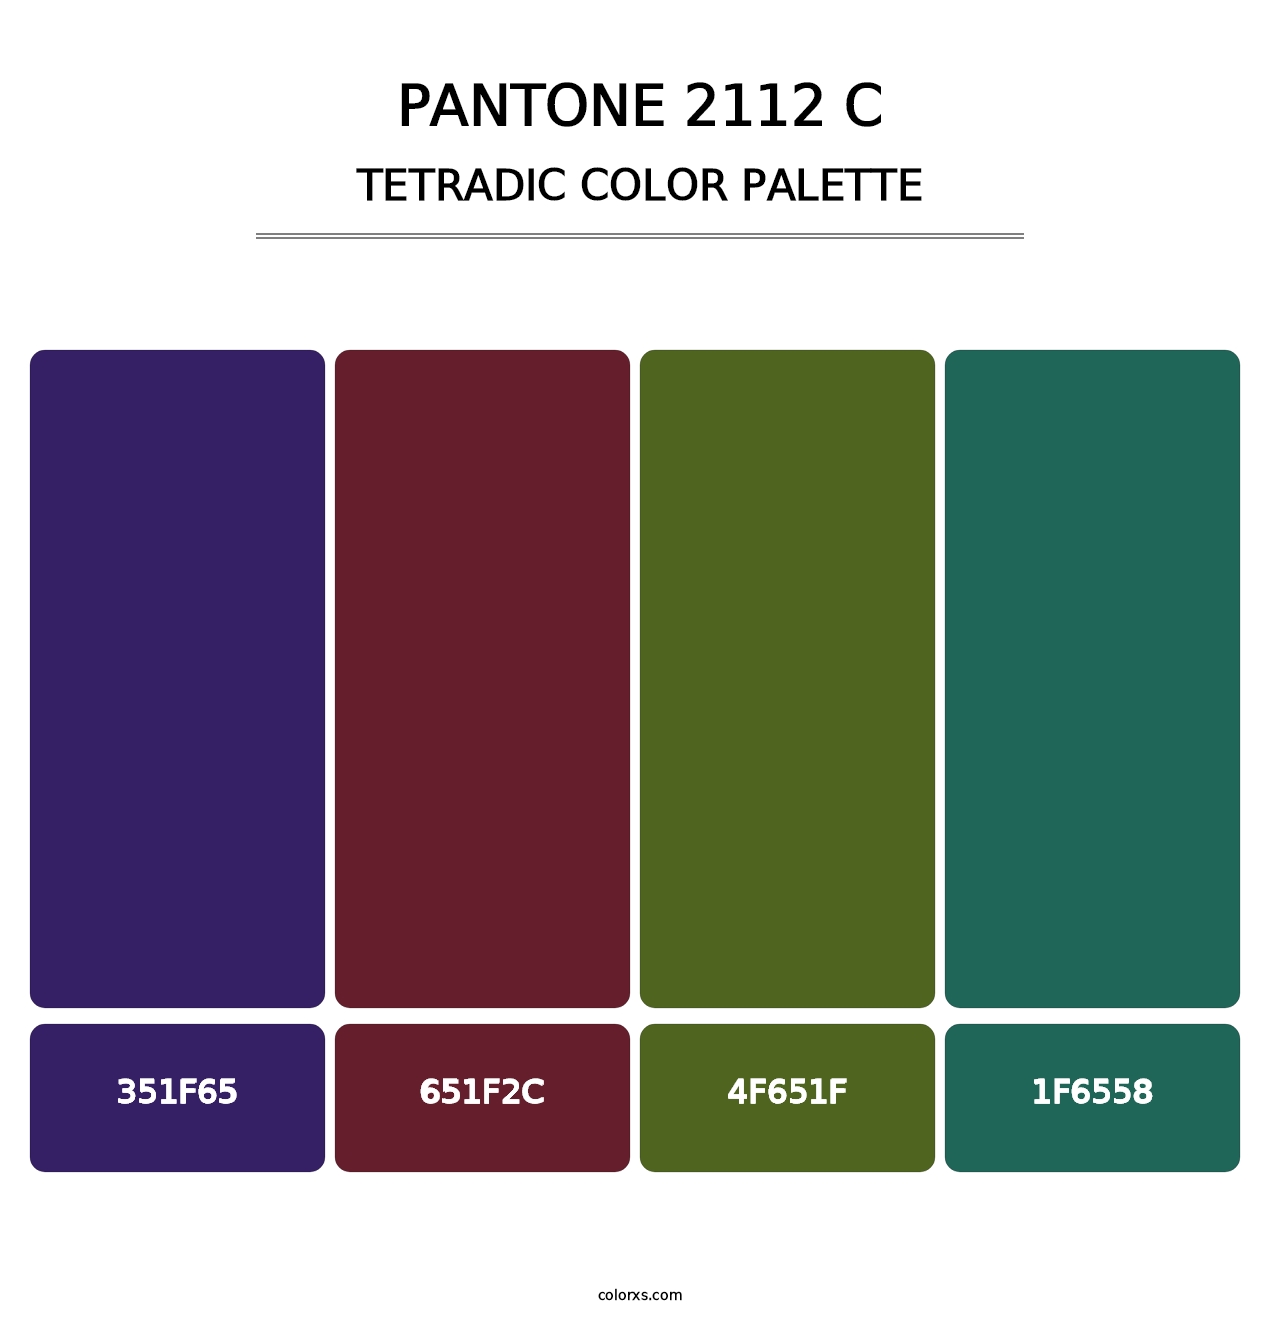 PANTONE 2112 C - Tetradic Color Palette